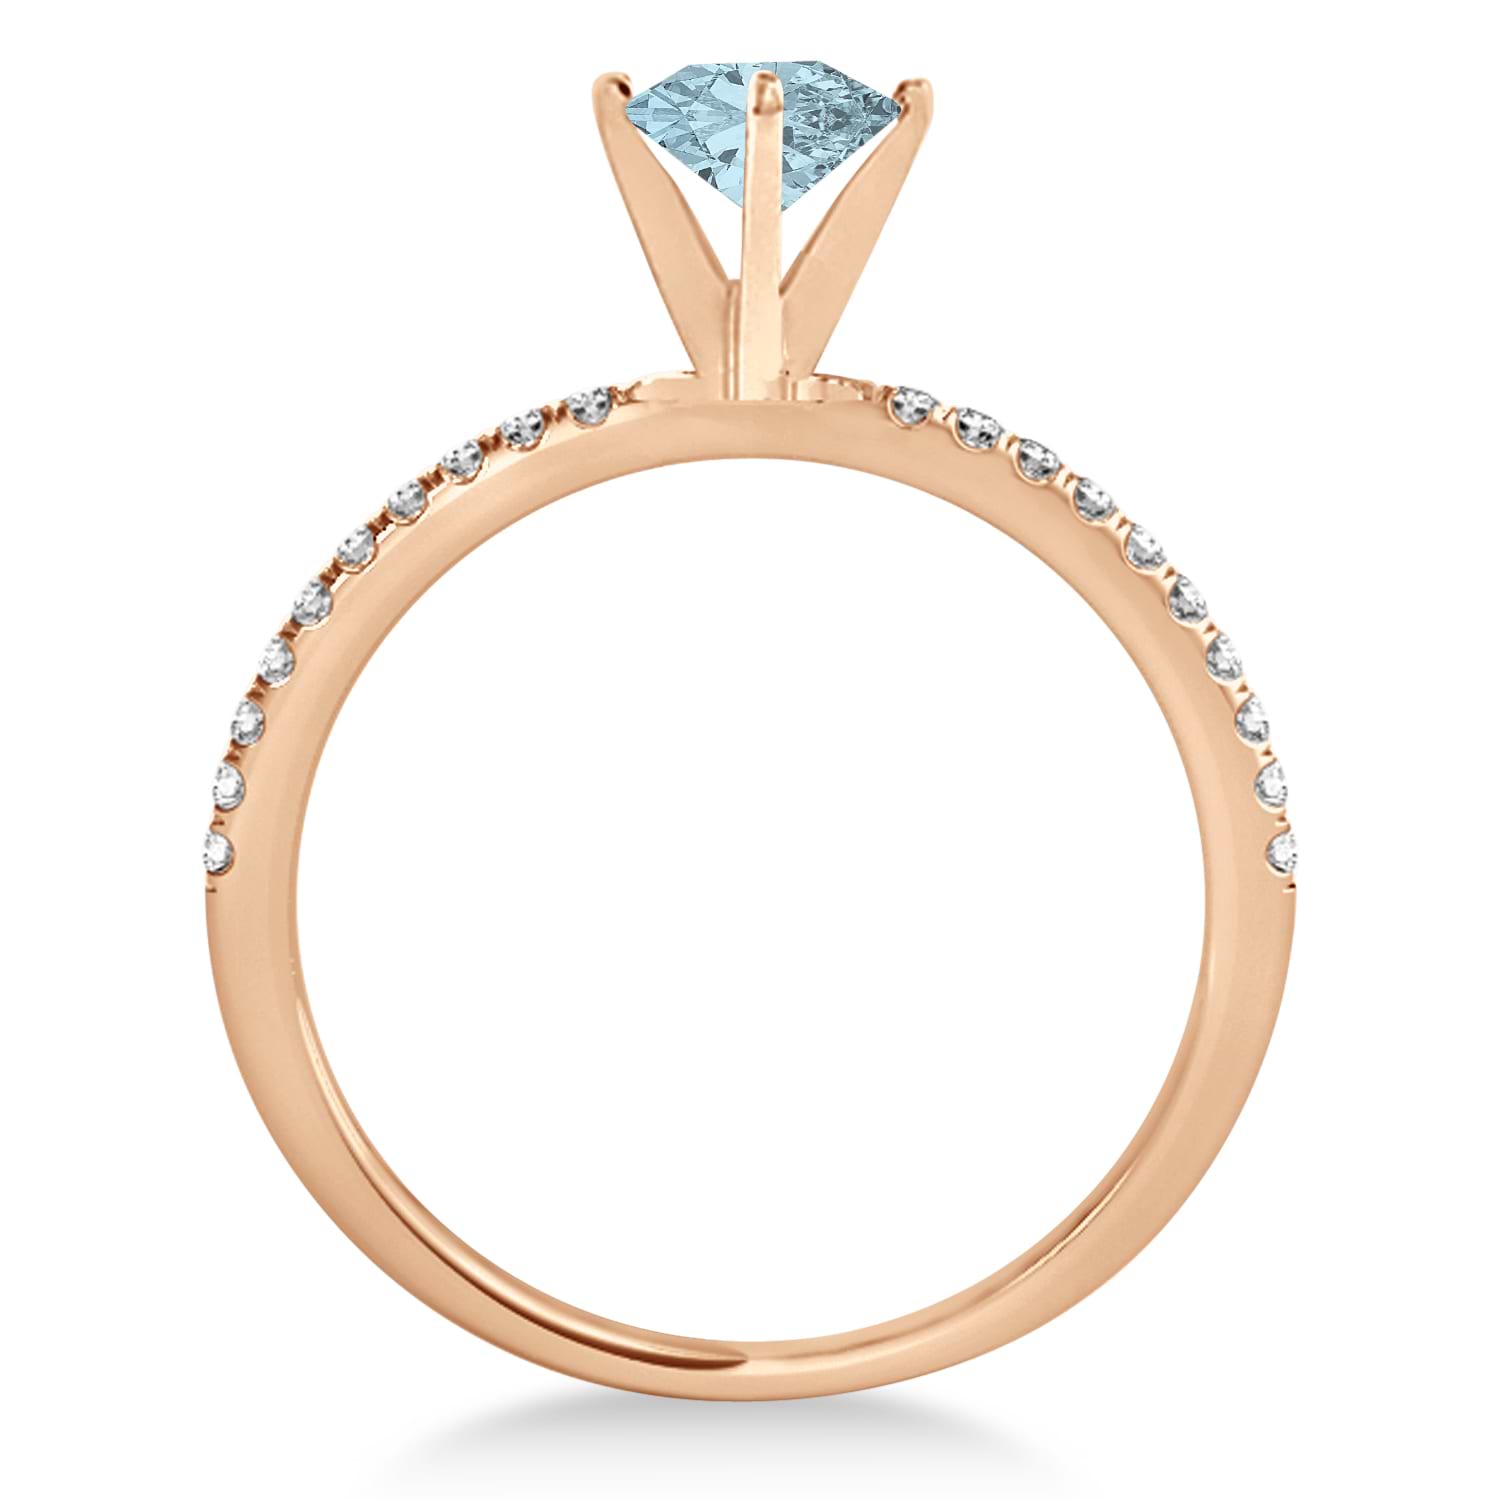 Aquamarine & Diamond Accented Oval Shape Engagement Ring 14k Rose Gold (1.00ct)